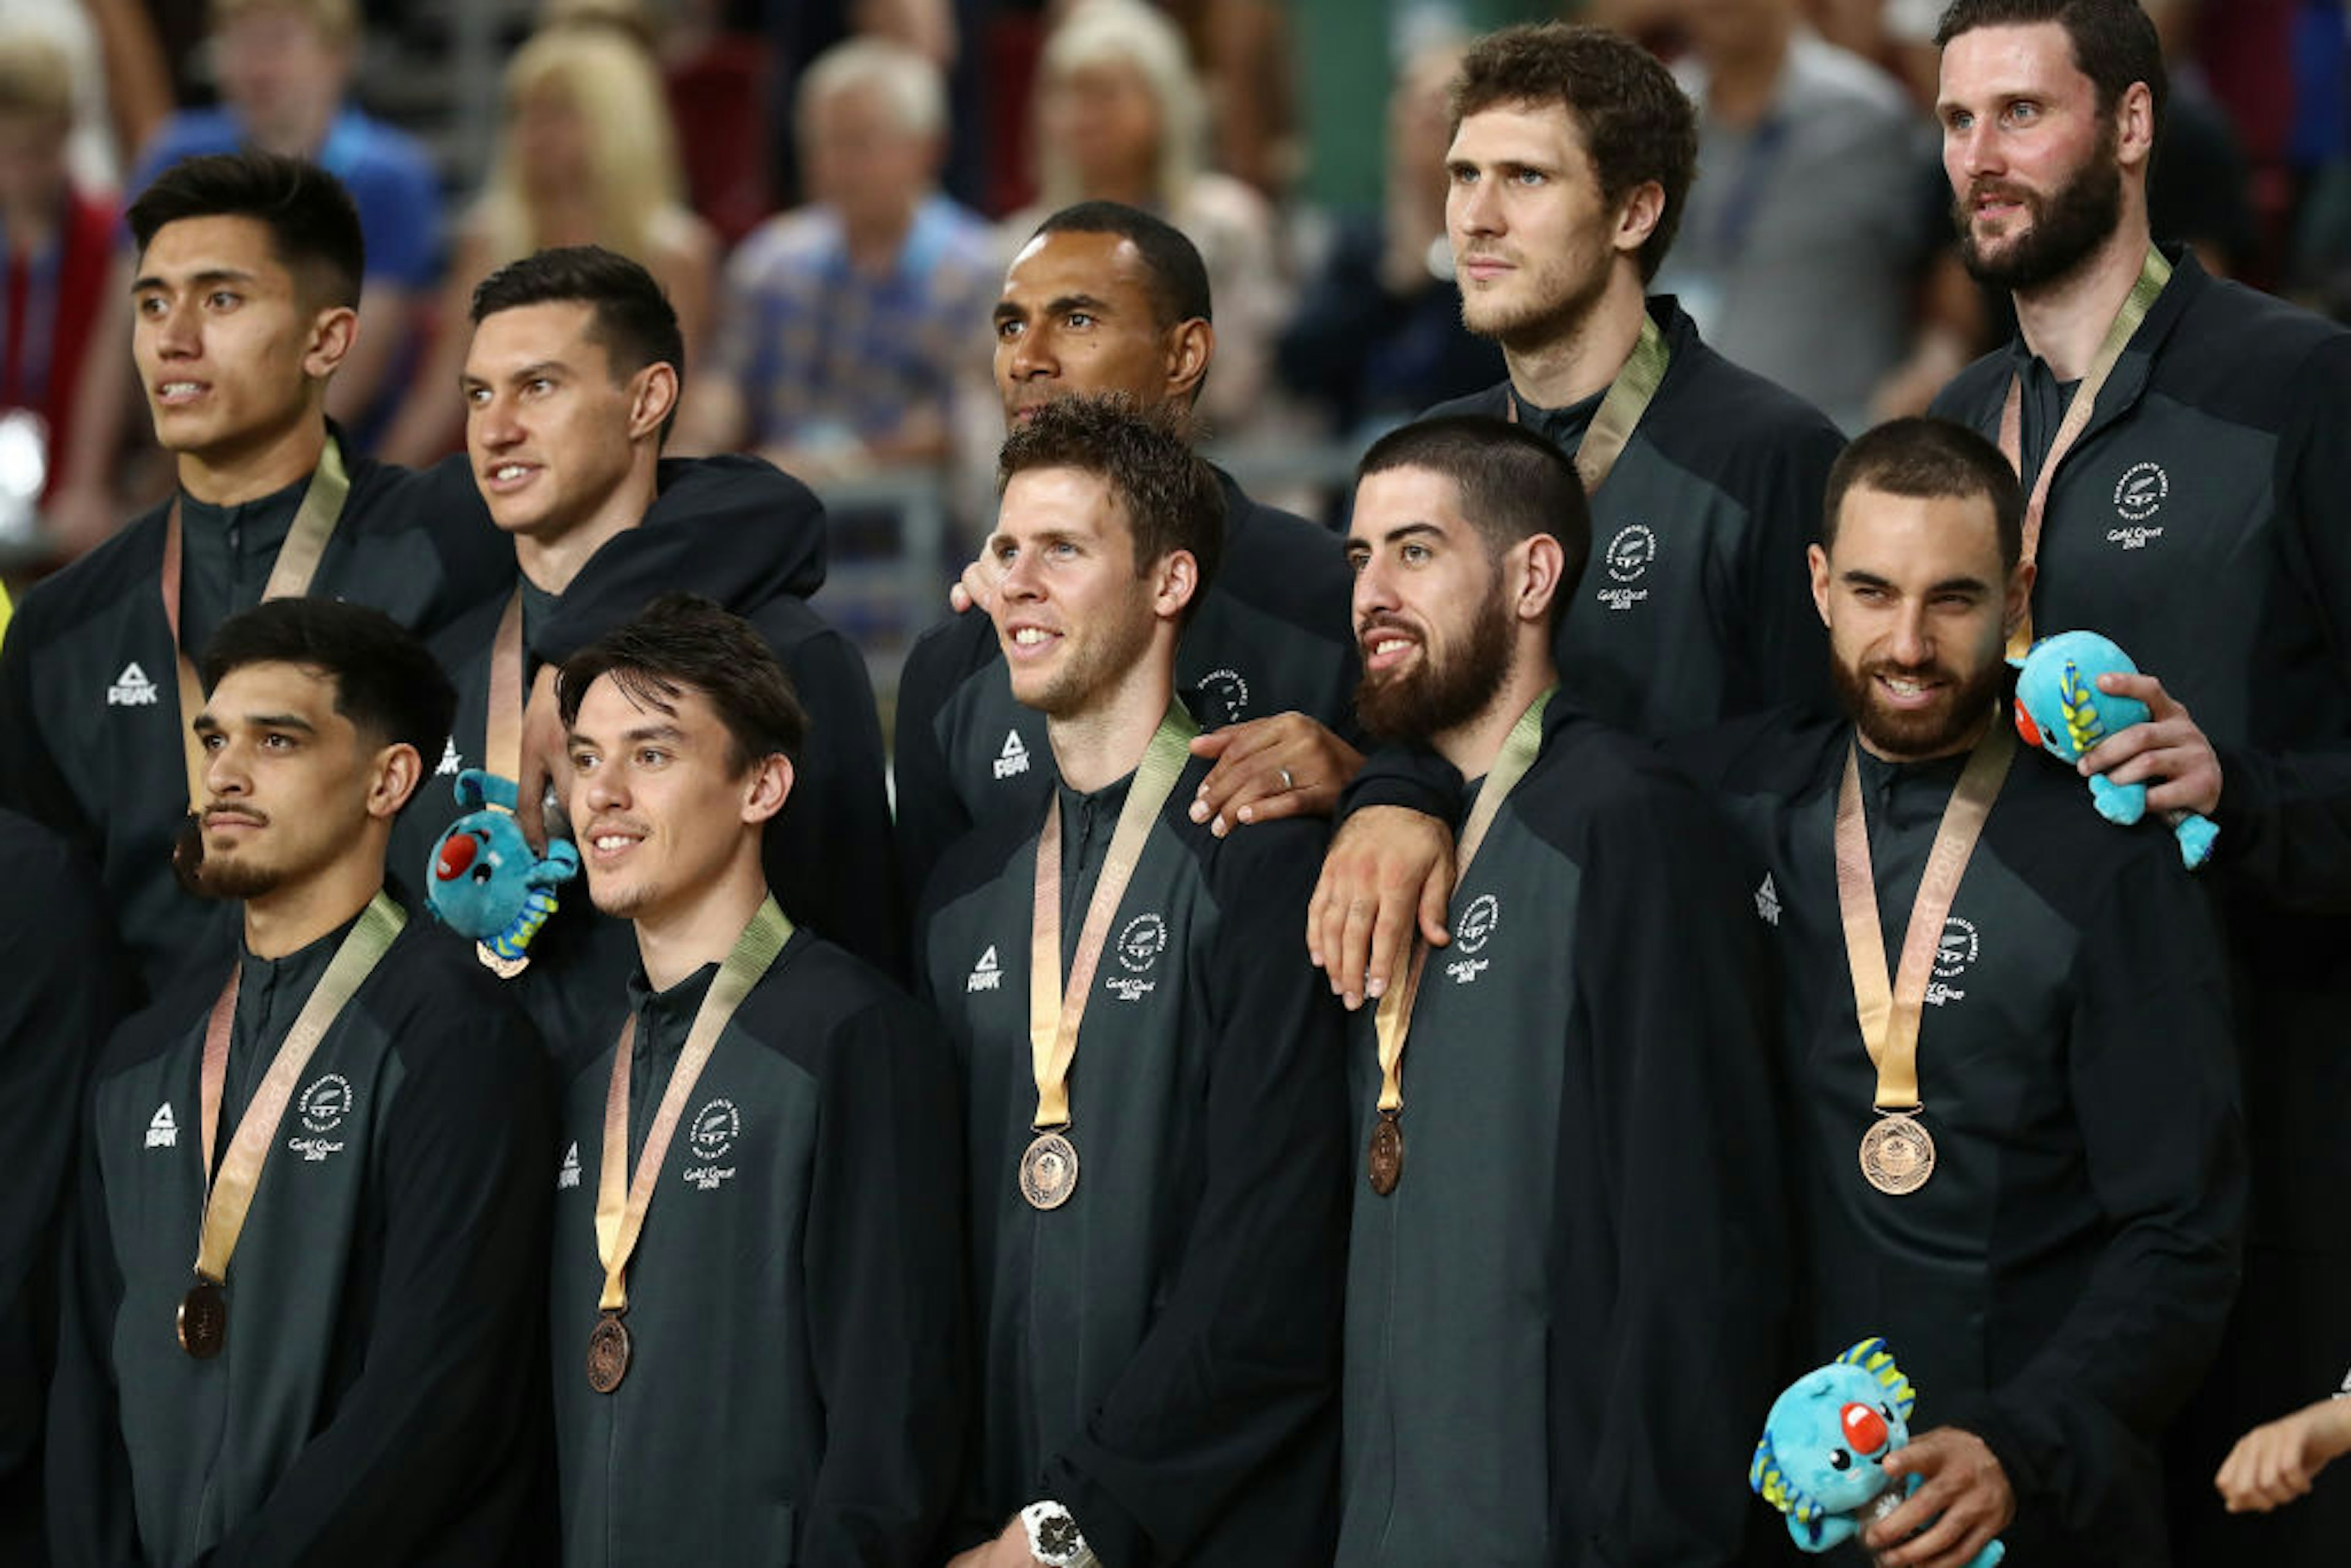 Basketball men wrap up bronze